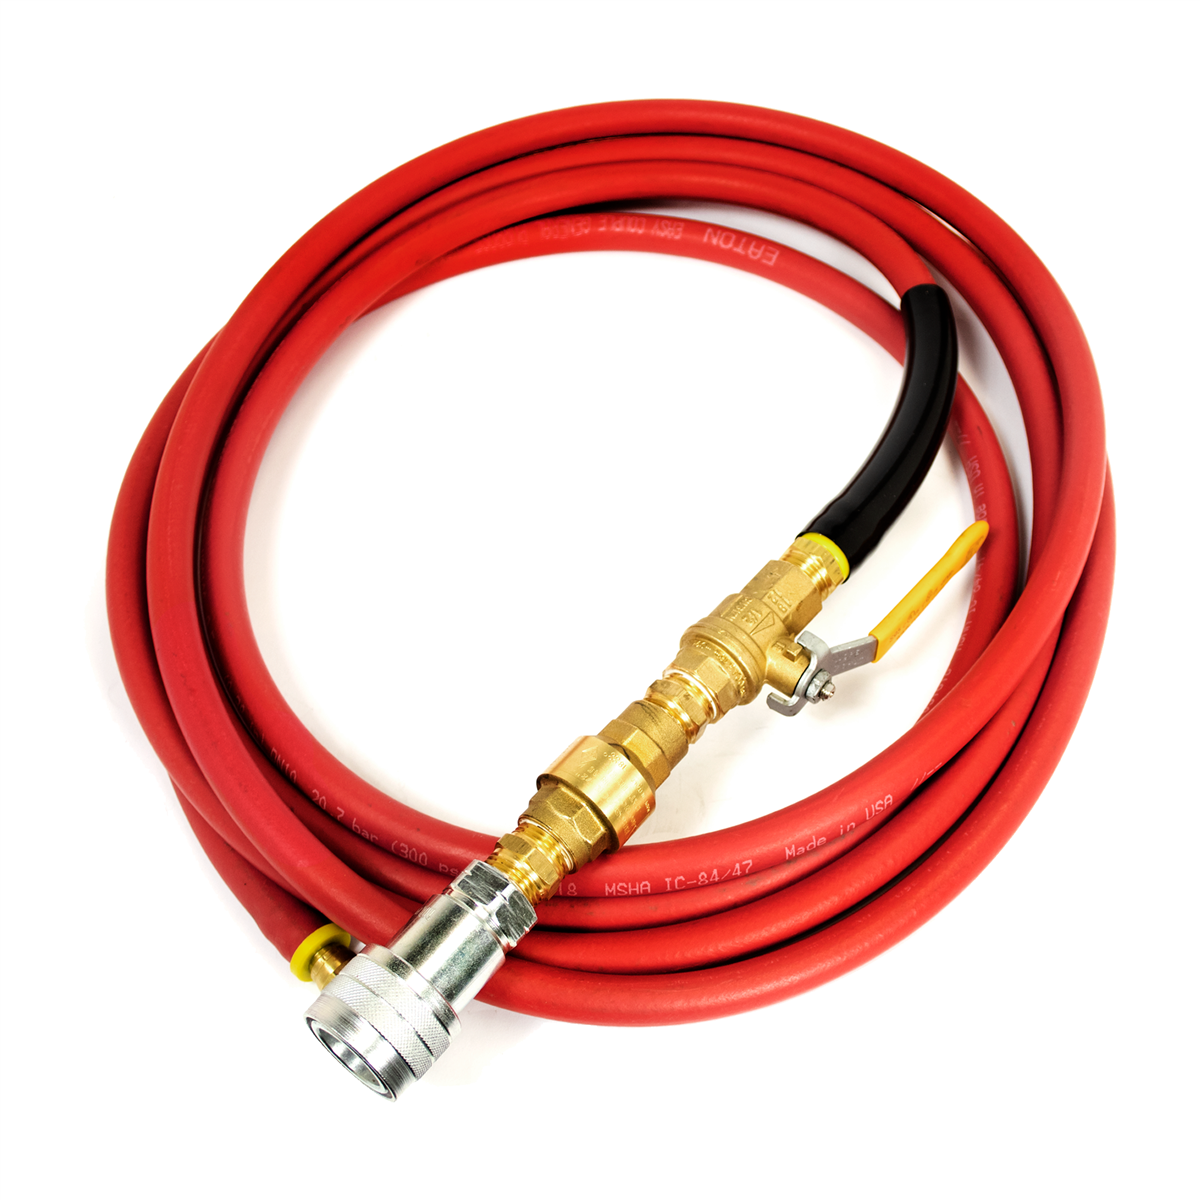 red pressure hose